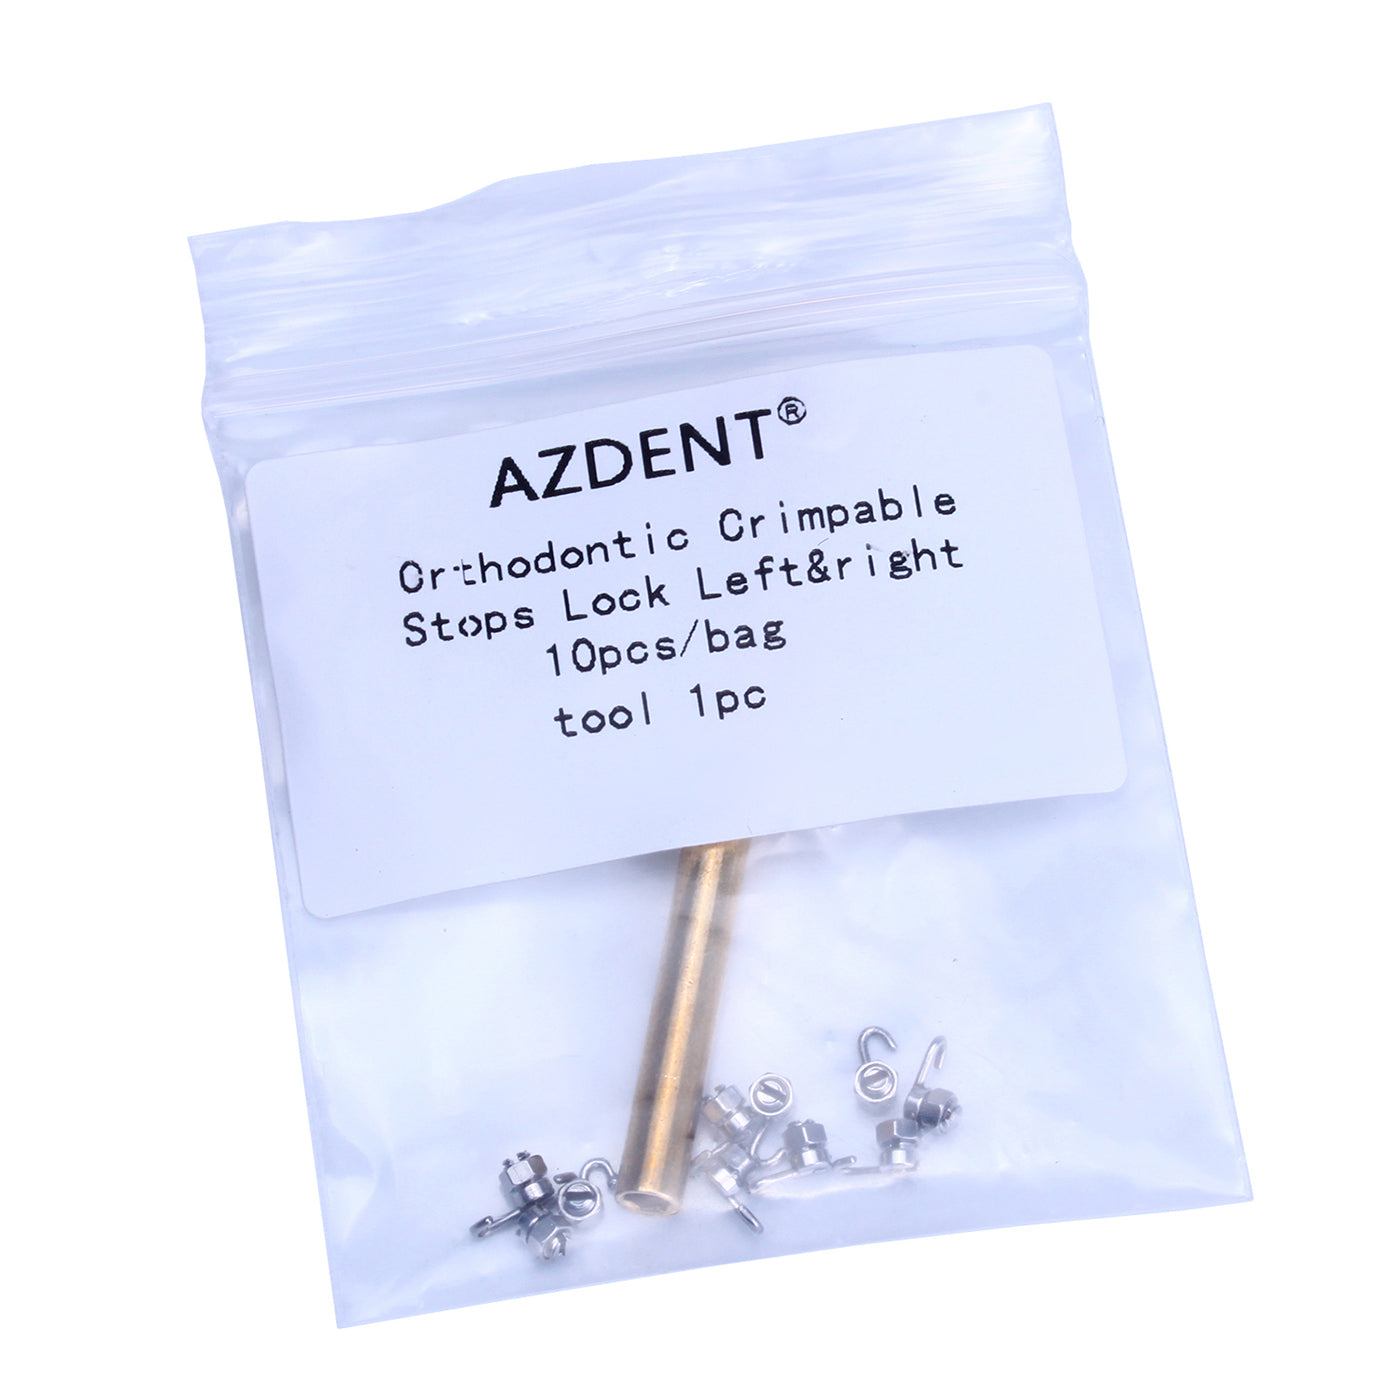 AZDENT Crimpable Hooks Removable Stop Locks Right & Left with Tool - azdentall.com